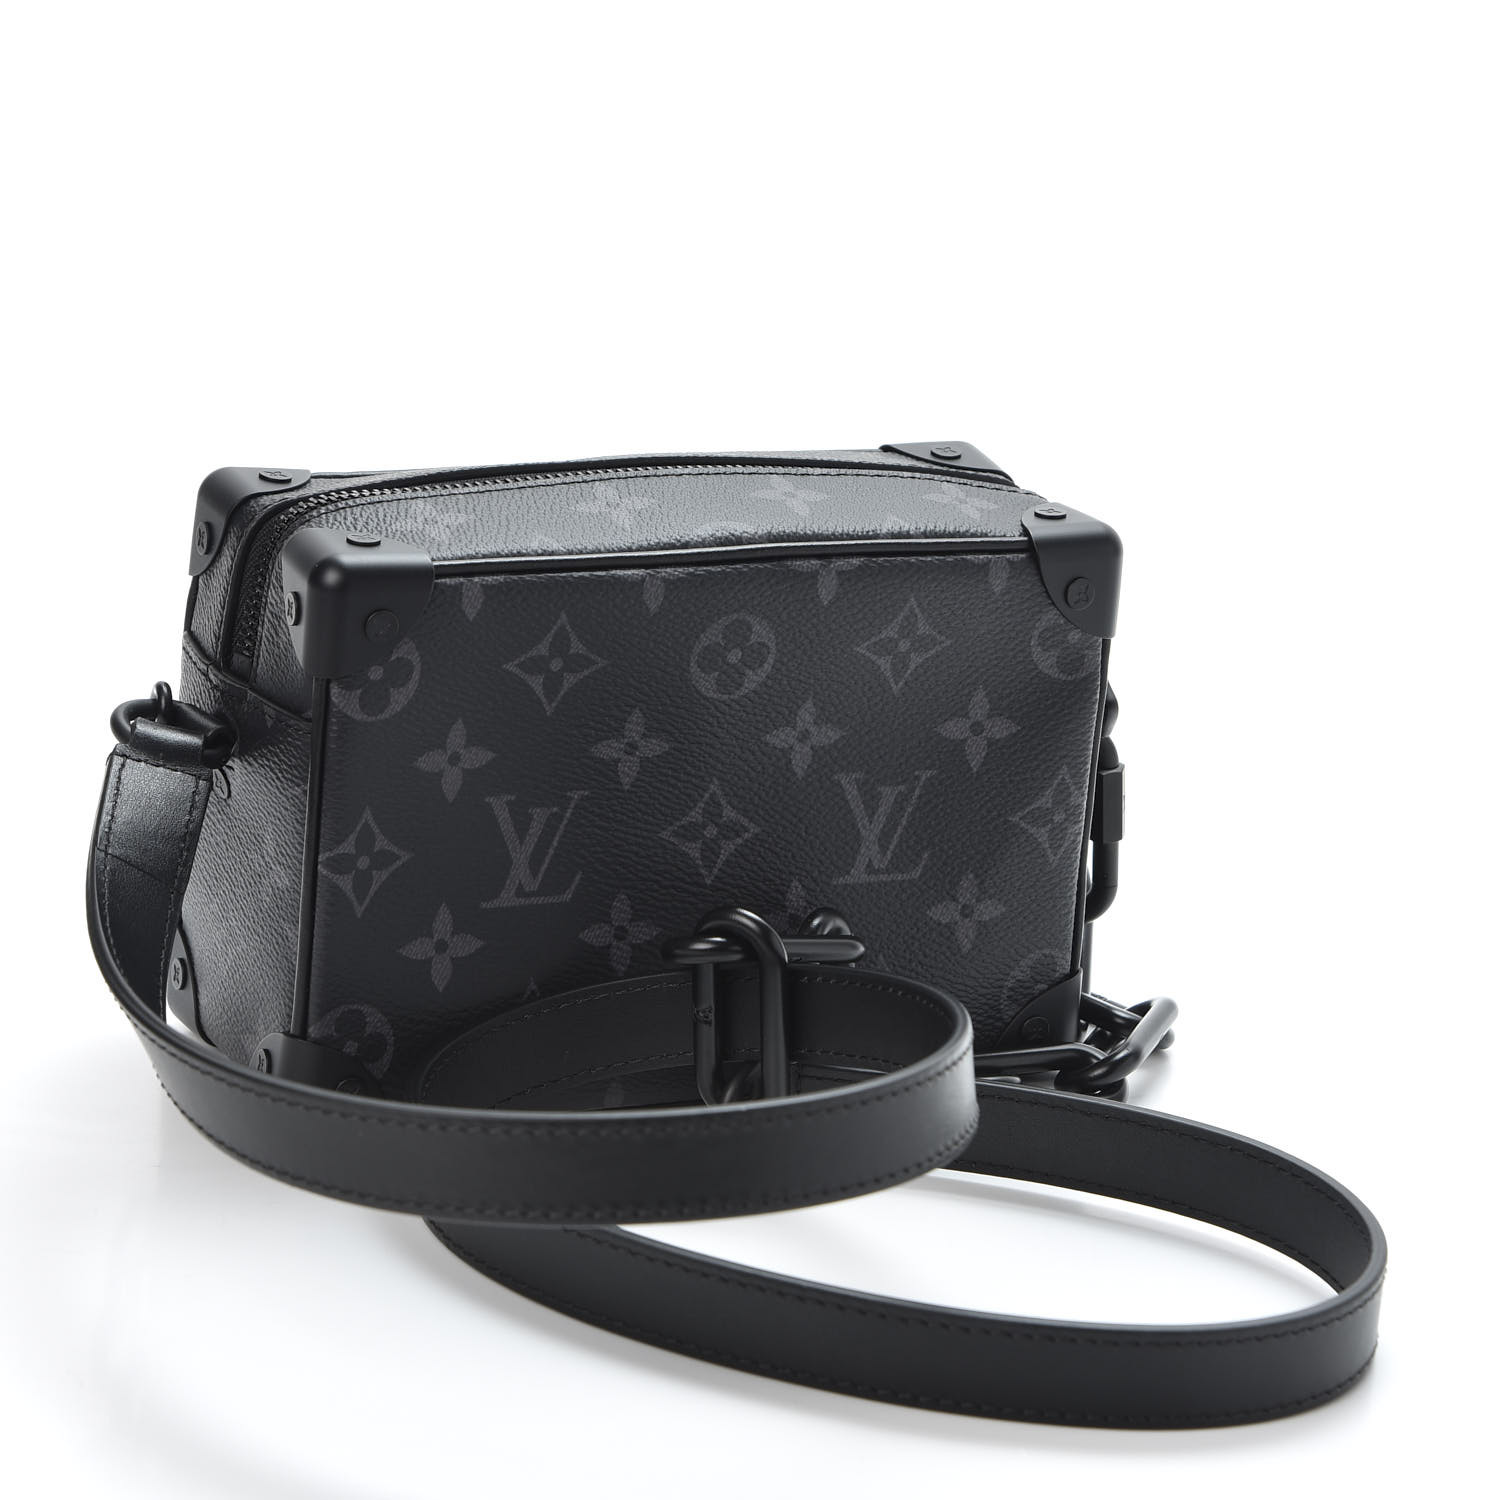 Louis Vuitton MONOGRAM Mini soft trunk (M44735)  Louis vuitton bag outfit, Mens  bags fashion, Lv handbags